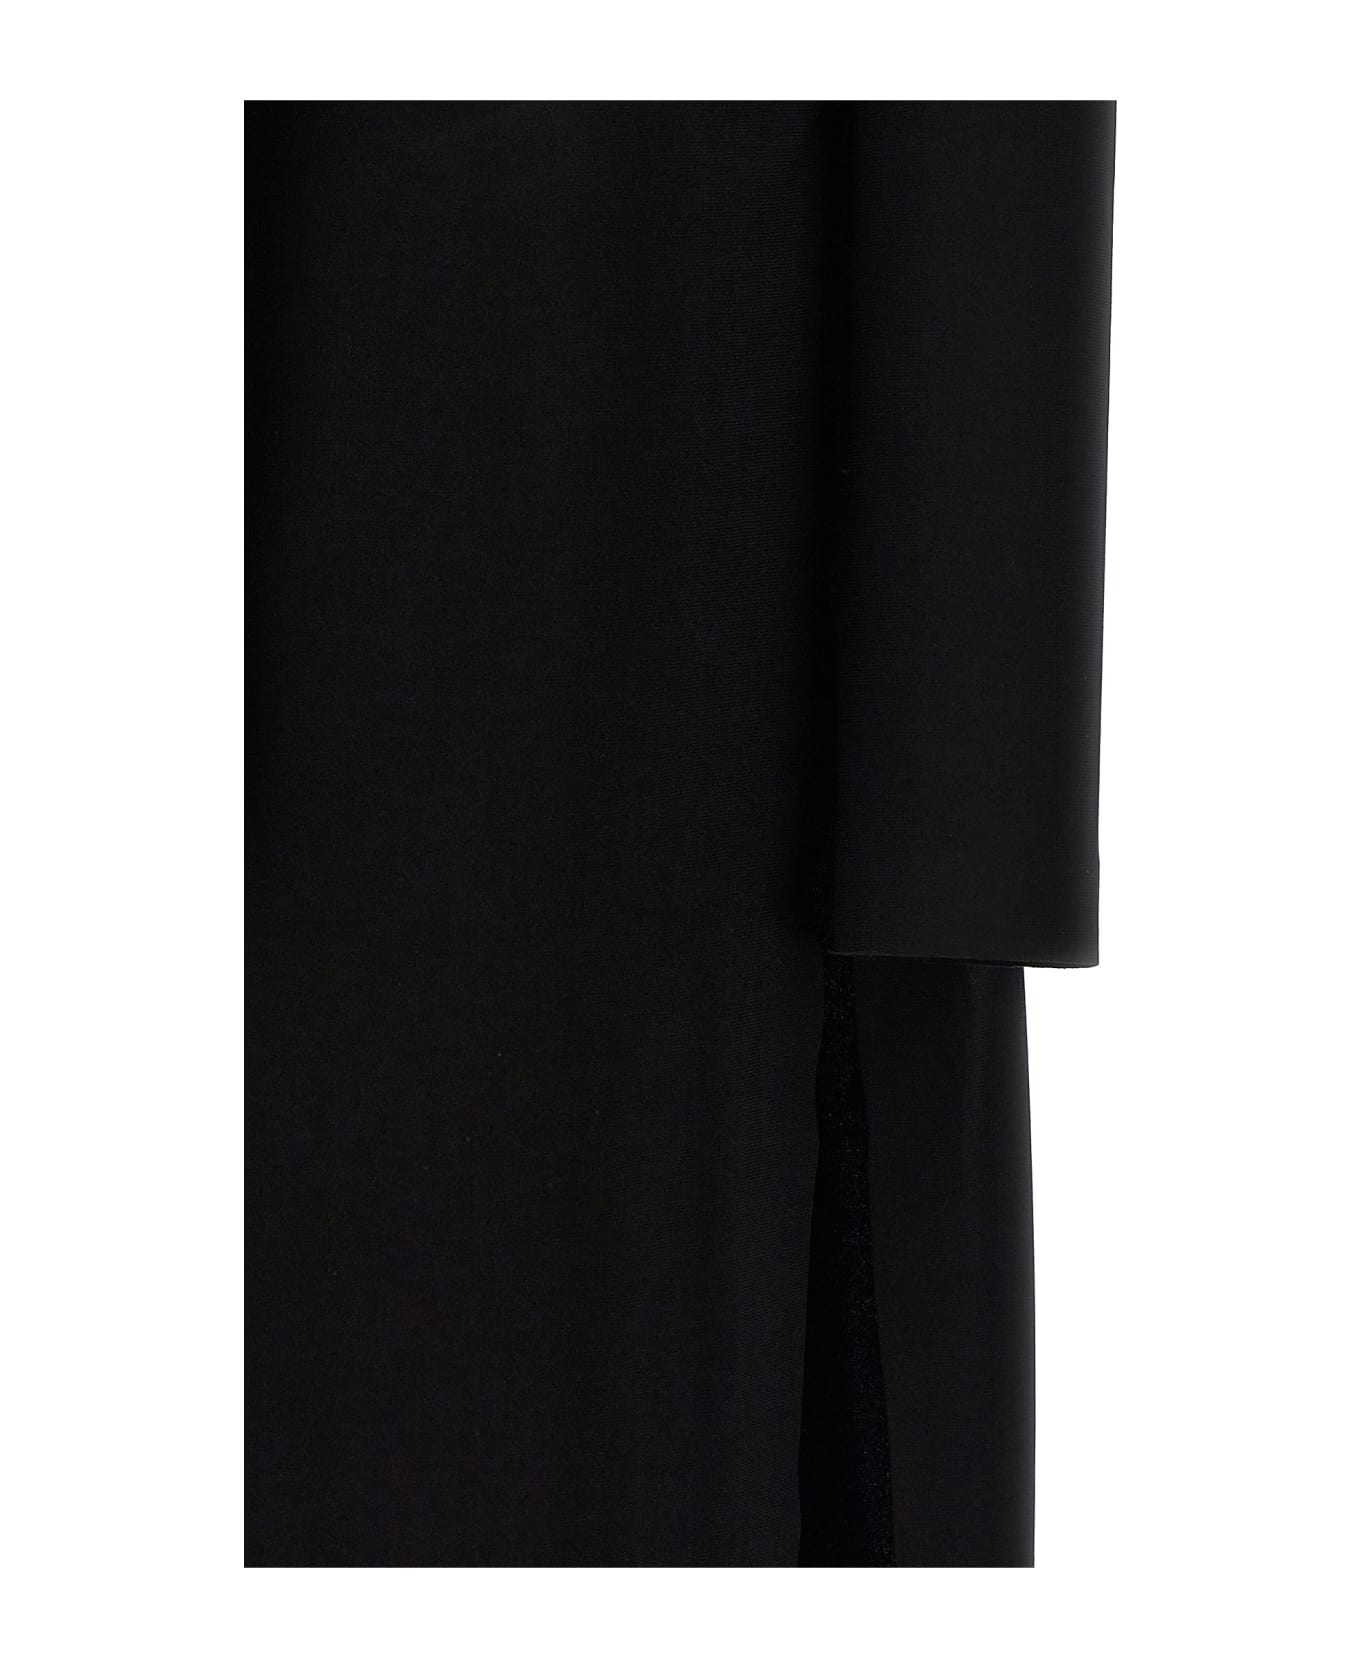 Norma Kamali Long U-neck Dress - Black  